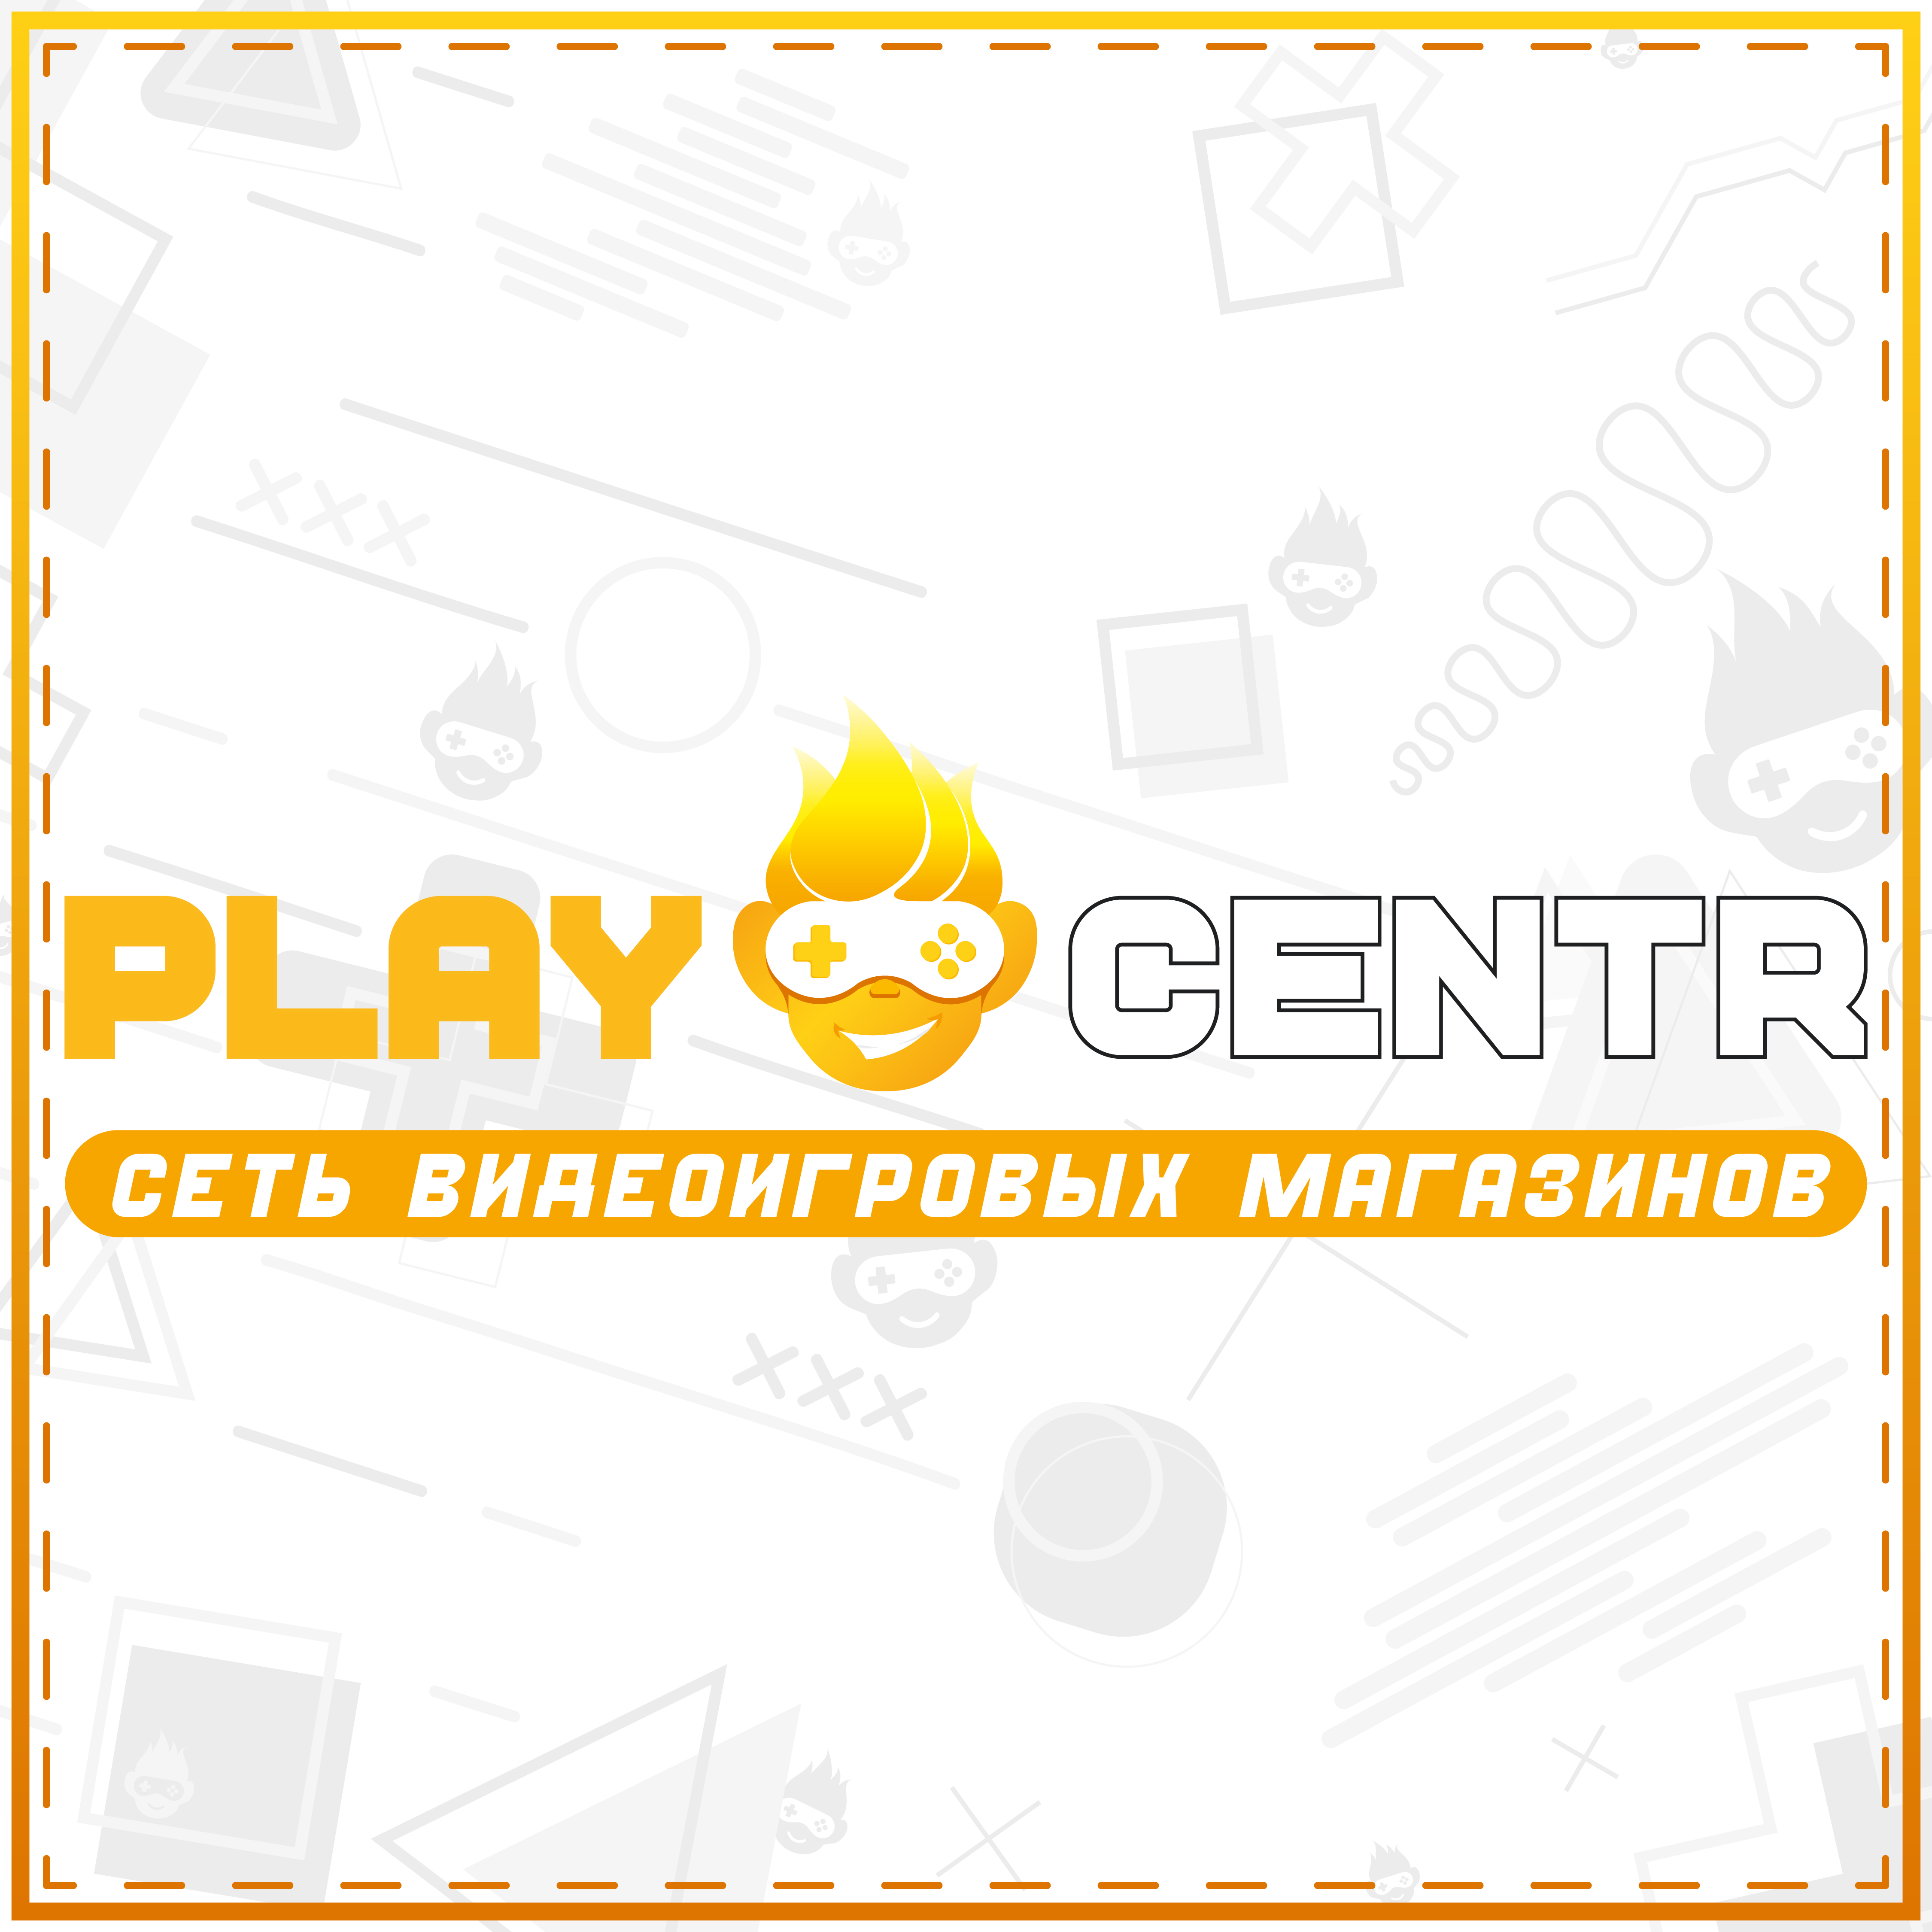 PlayCentr